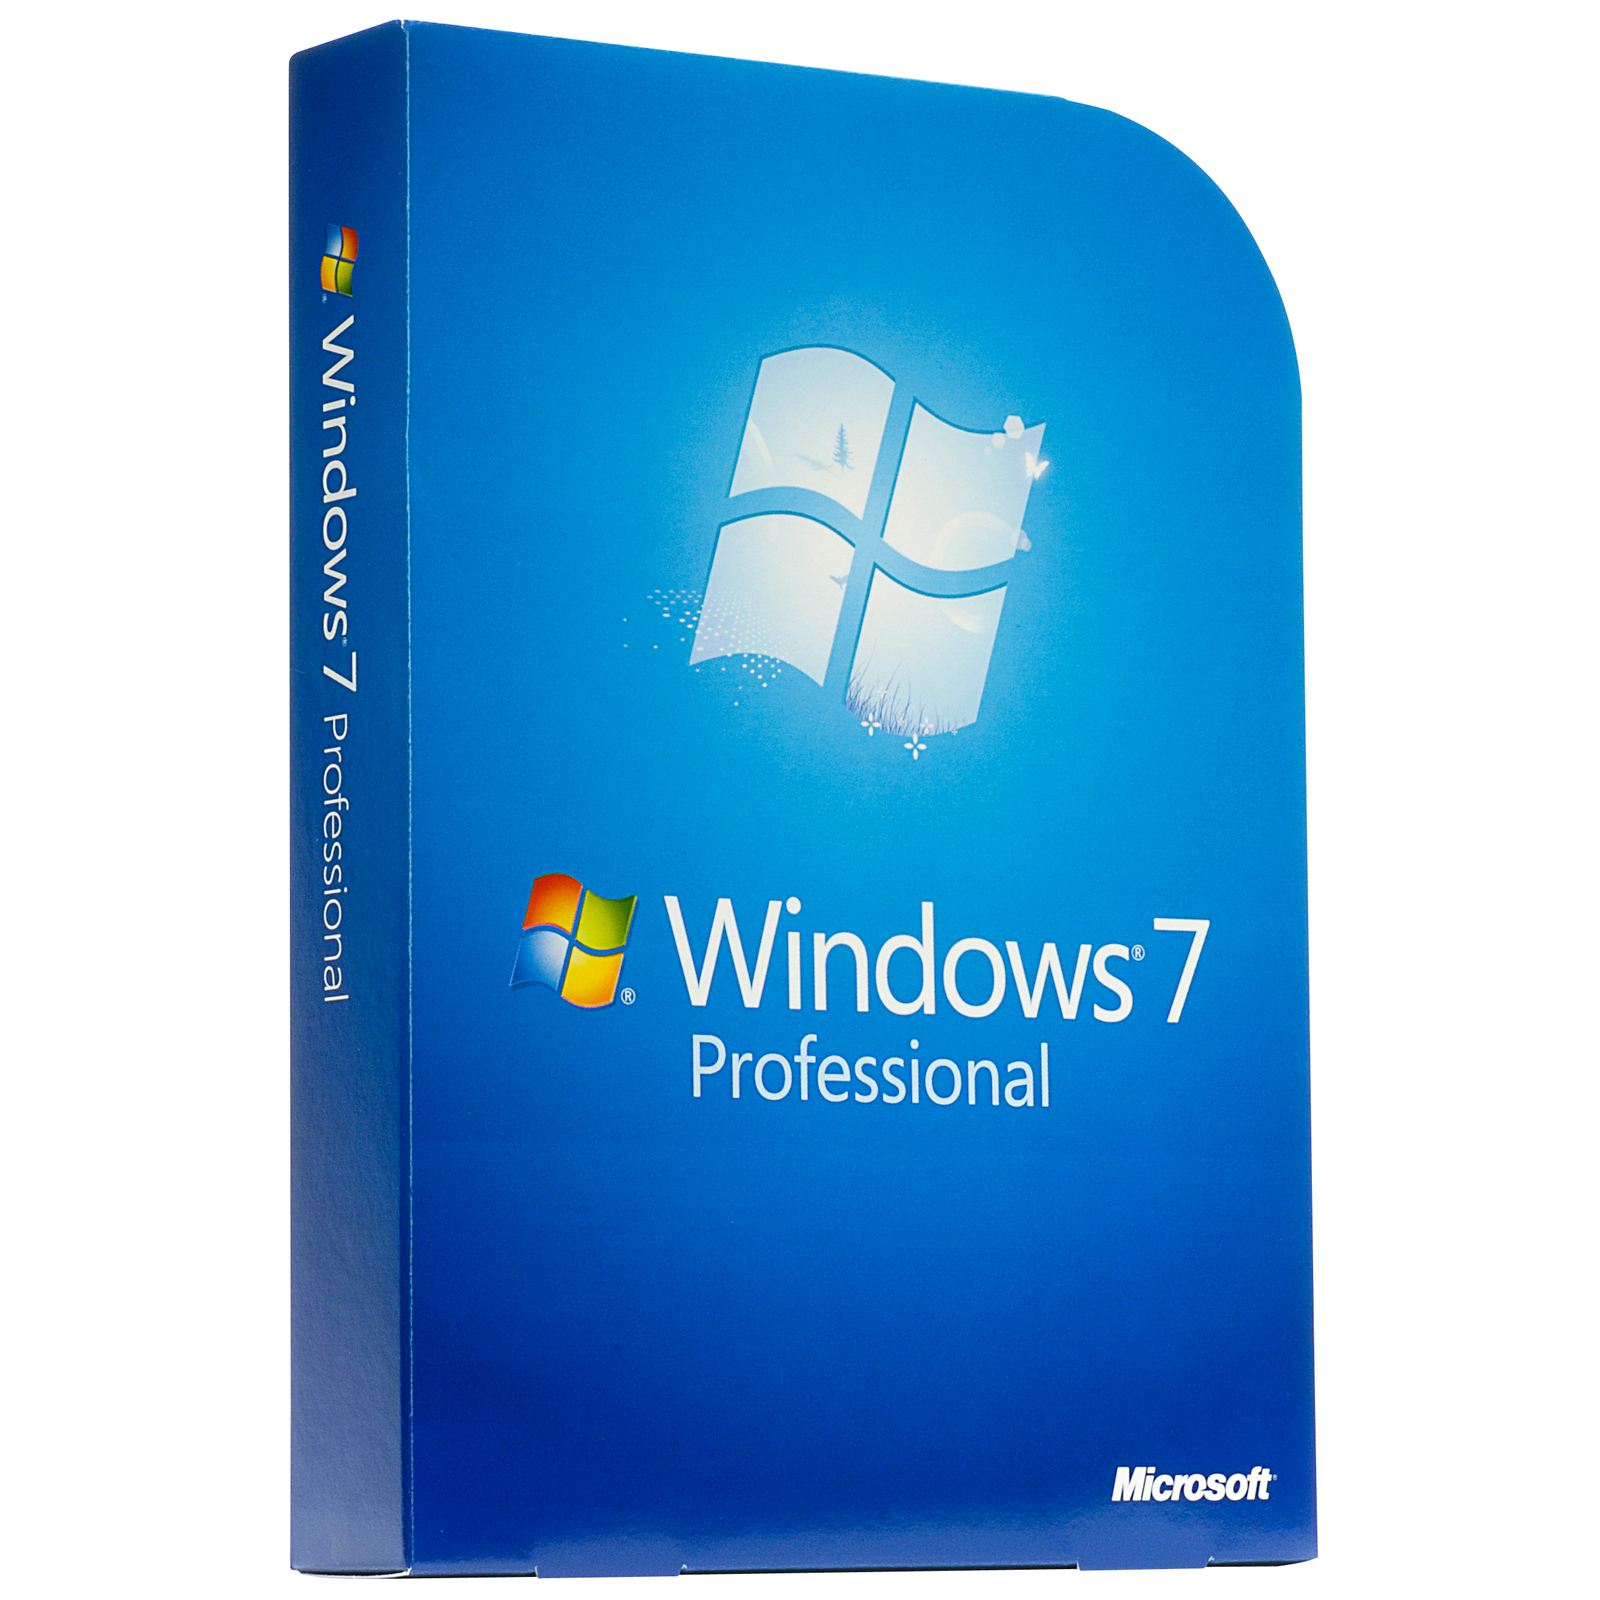 Windows 7 professional 64 bits download